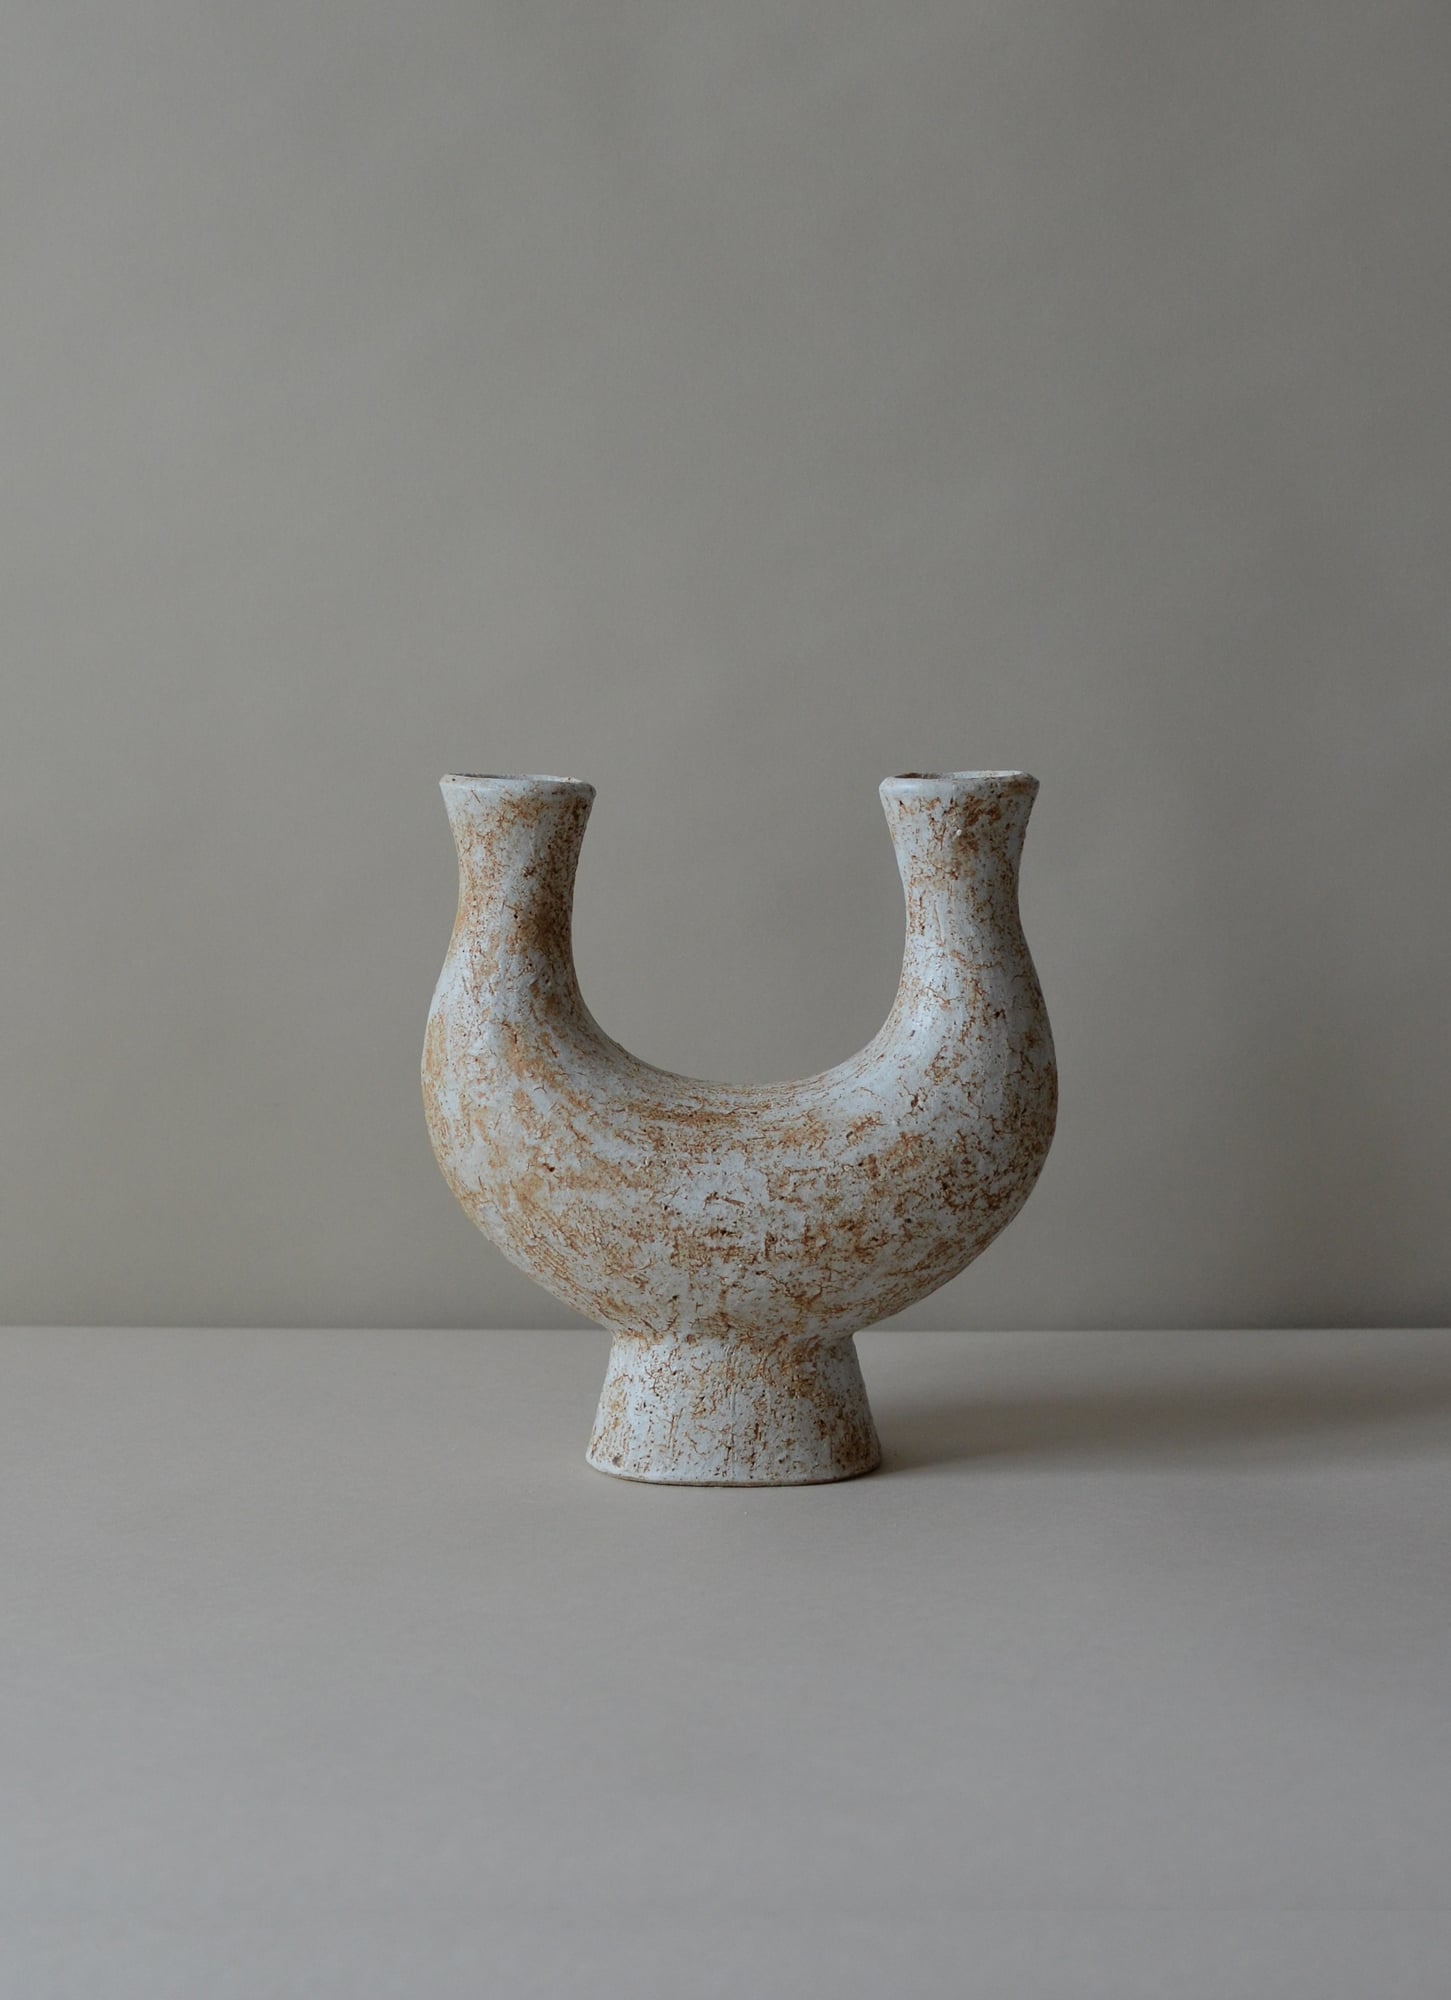 Viv Lee - Handmade stoneware - Wild clay edition - Vessel - Ornis No. 6